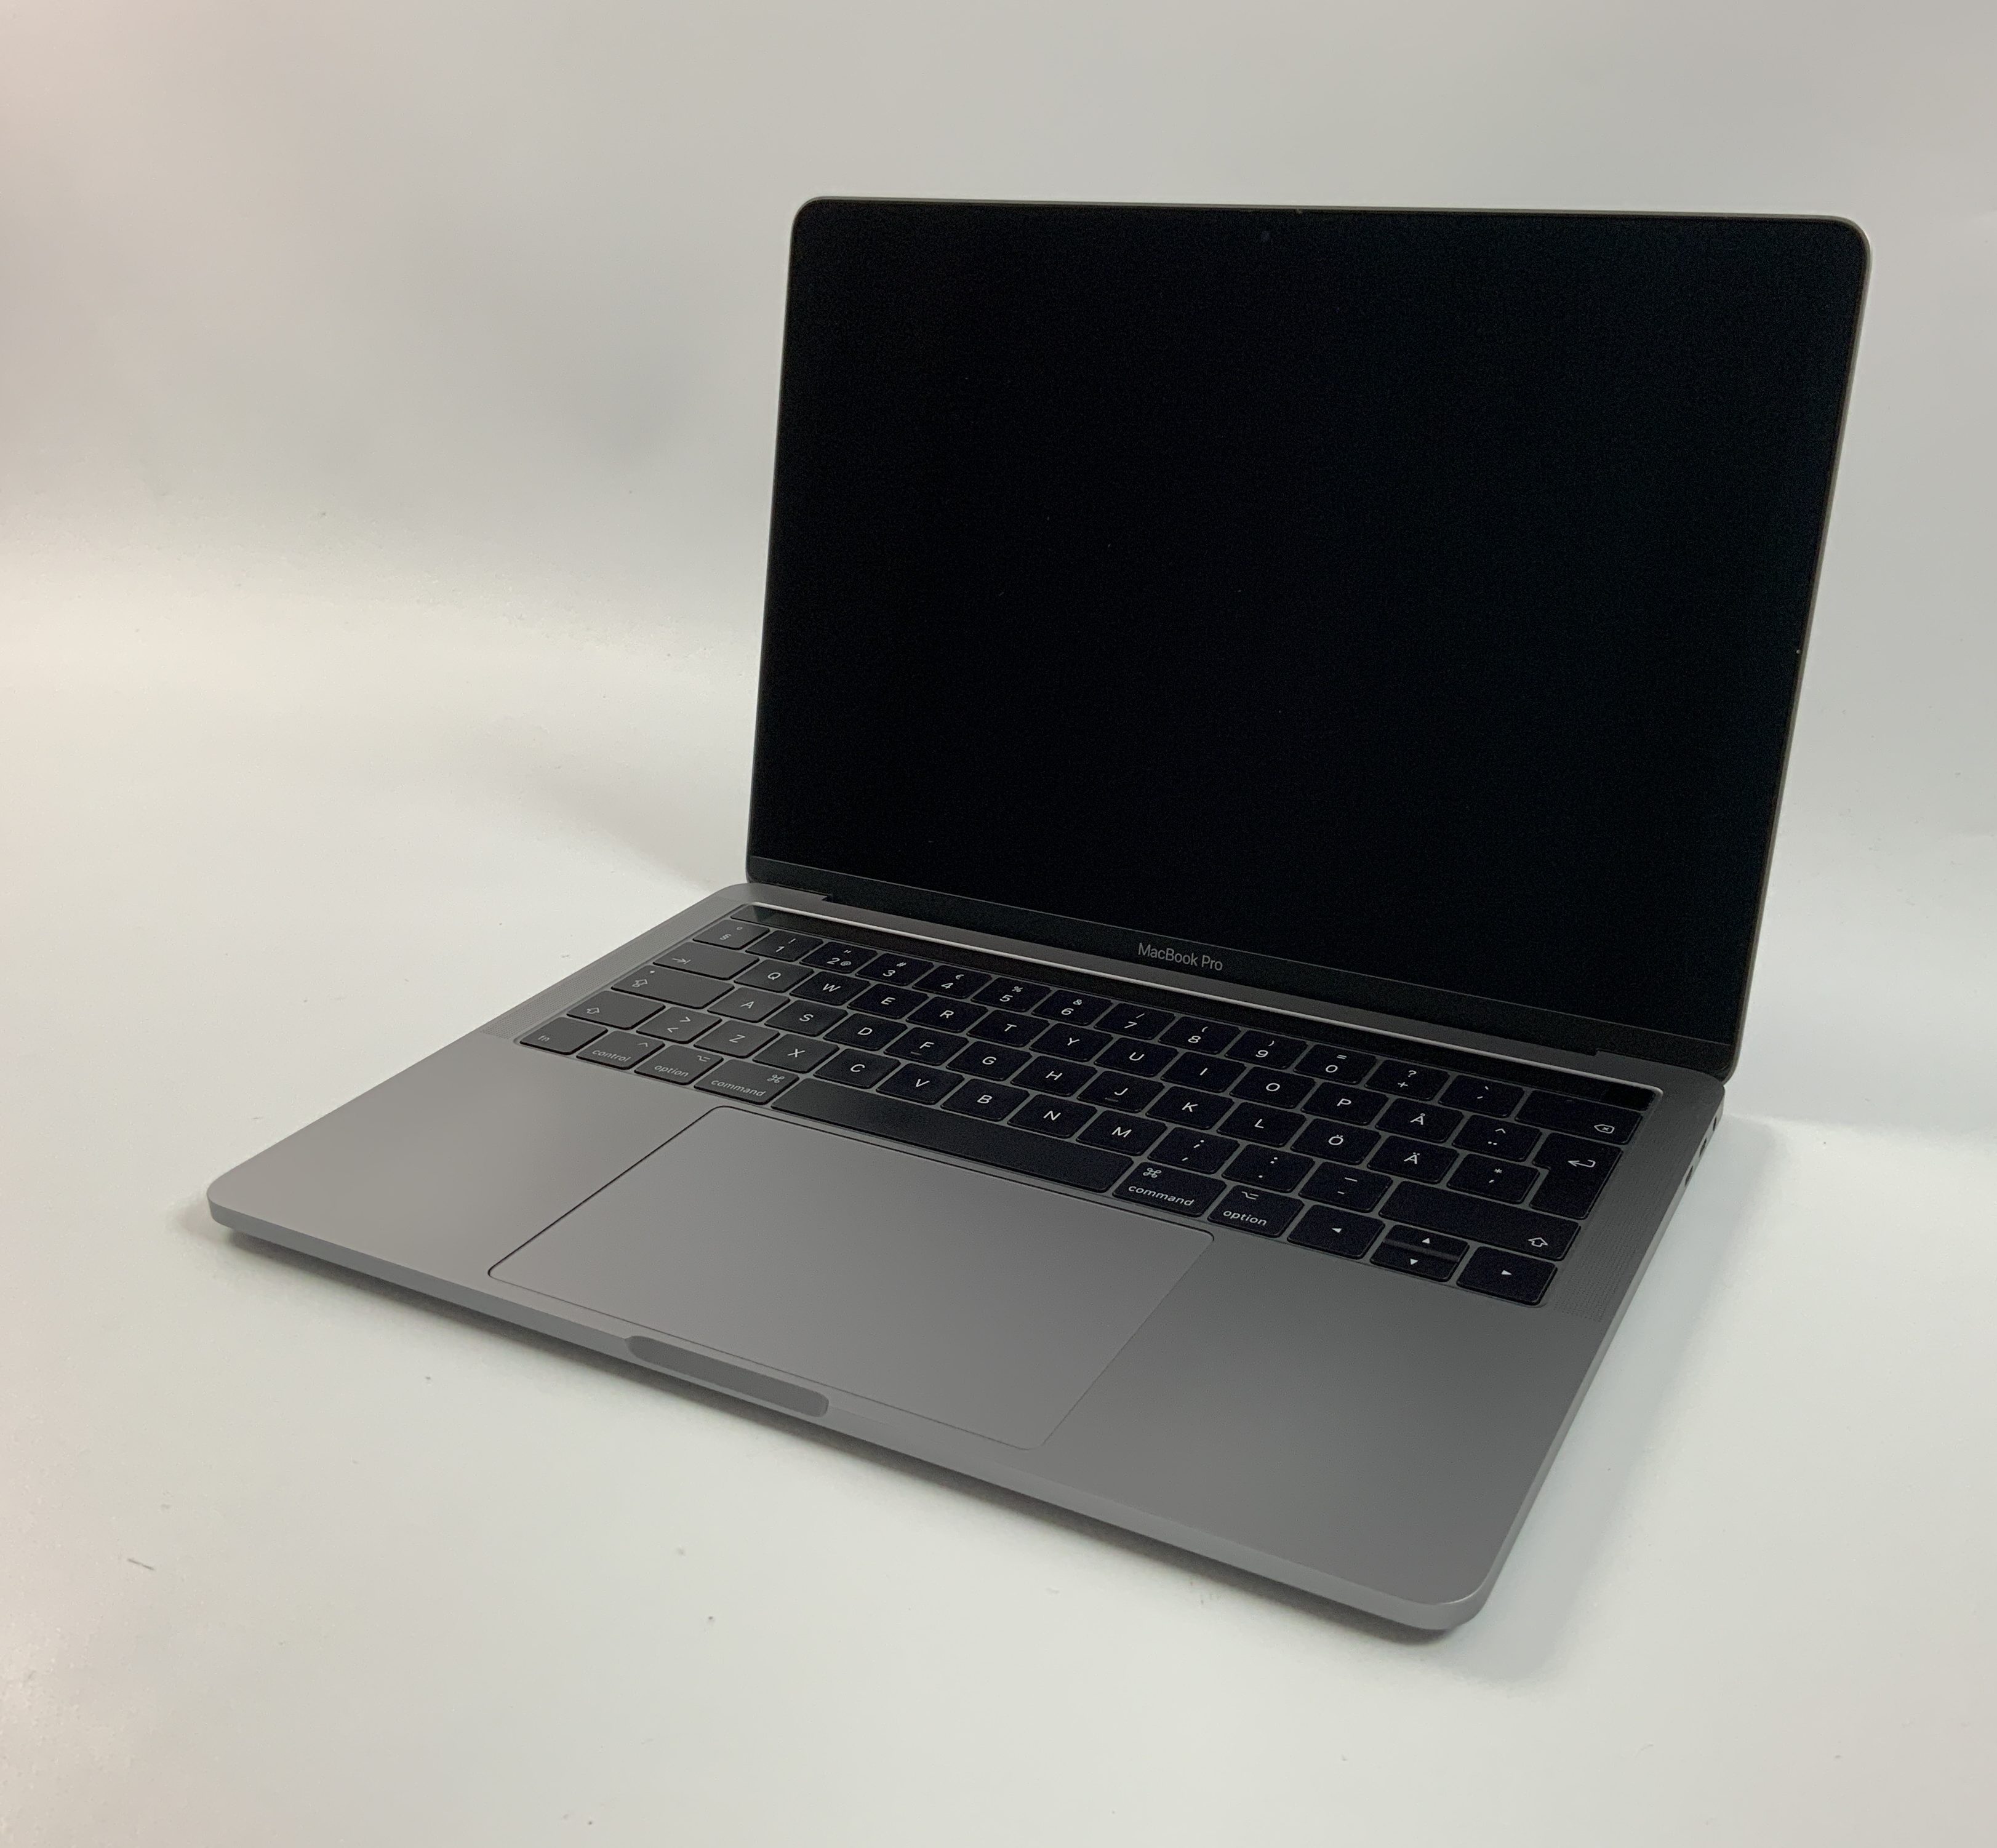 MacBook Pro 13" 4TBT Late 2016 (Intel Core i5 2.9 GHz 16 GB RAM 256 GB SSD), Space Gray, Intel Core i5 2.9 GHz, 16 GB RAM, 256 GB SSD, immagine 1